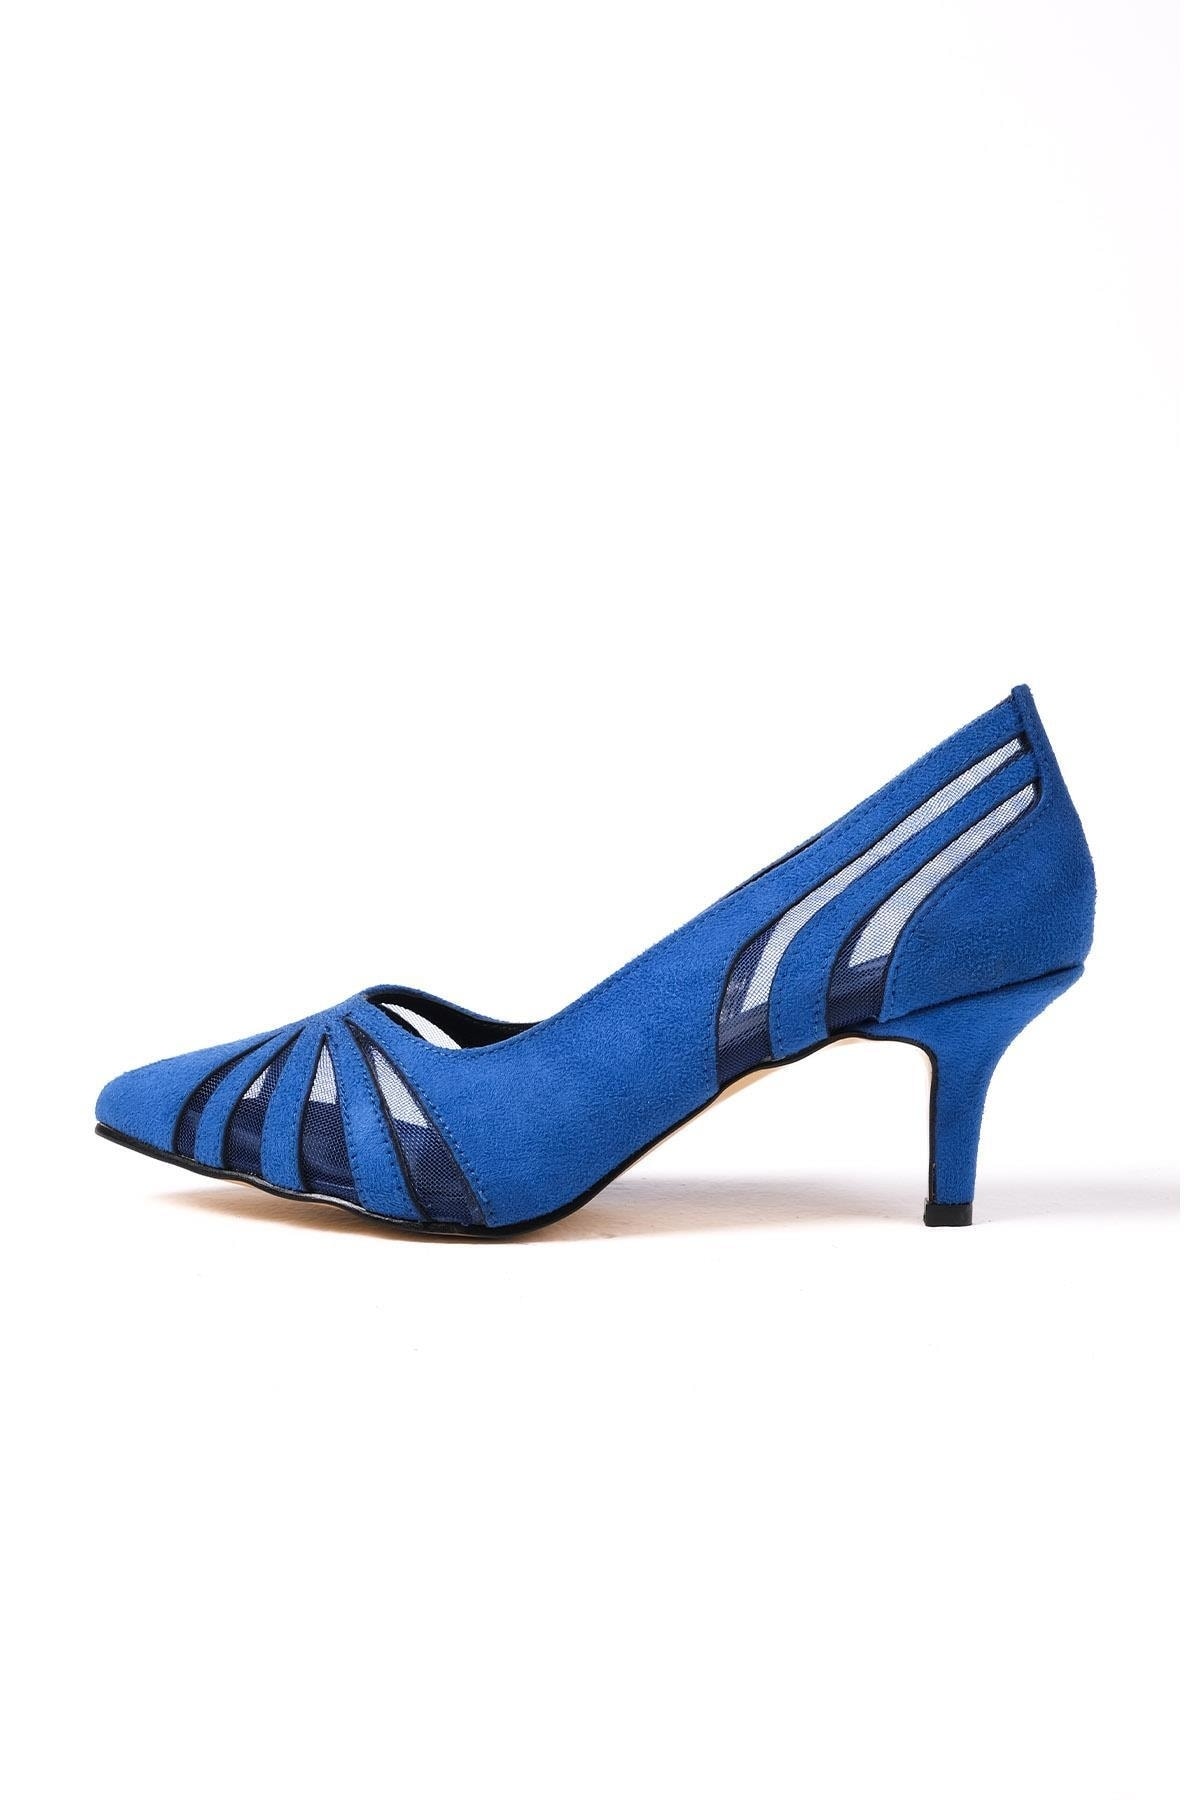 Mio Gusto Liana Saks Mavi Renk Süet Kadın Kısa Topuklu Ayakkabı